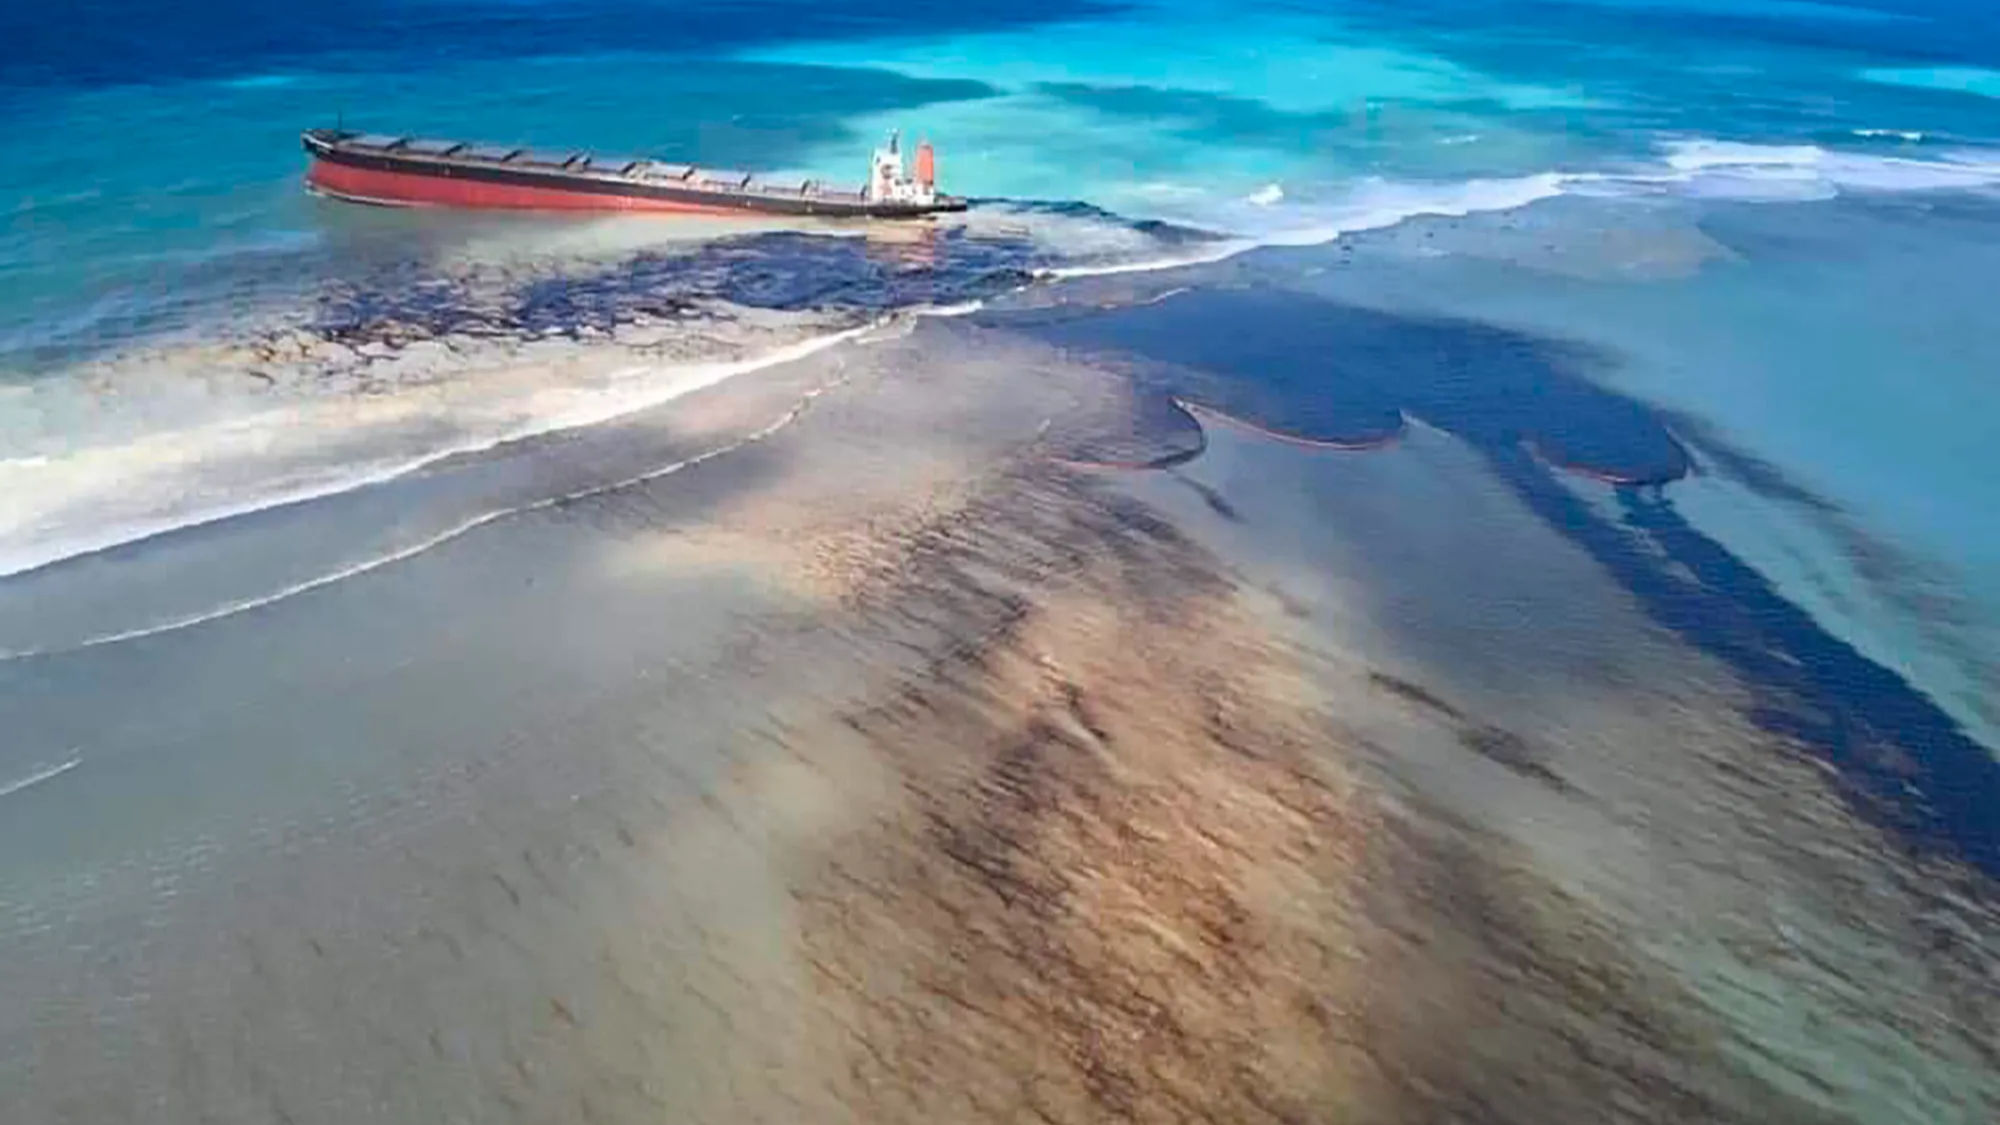 Mauritius declares emergency as oil spill crisis worsens, France deploy teams